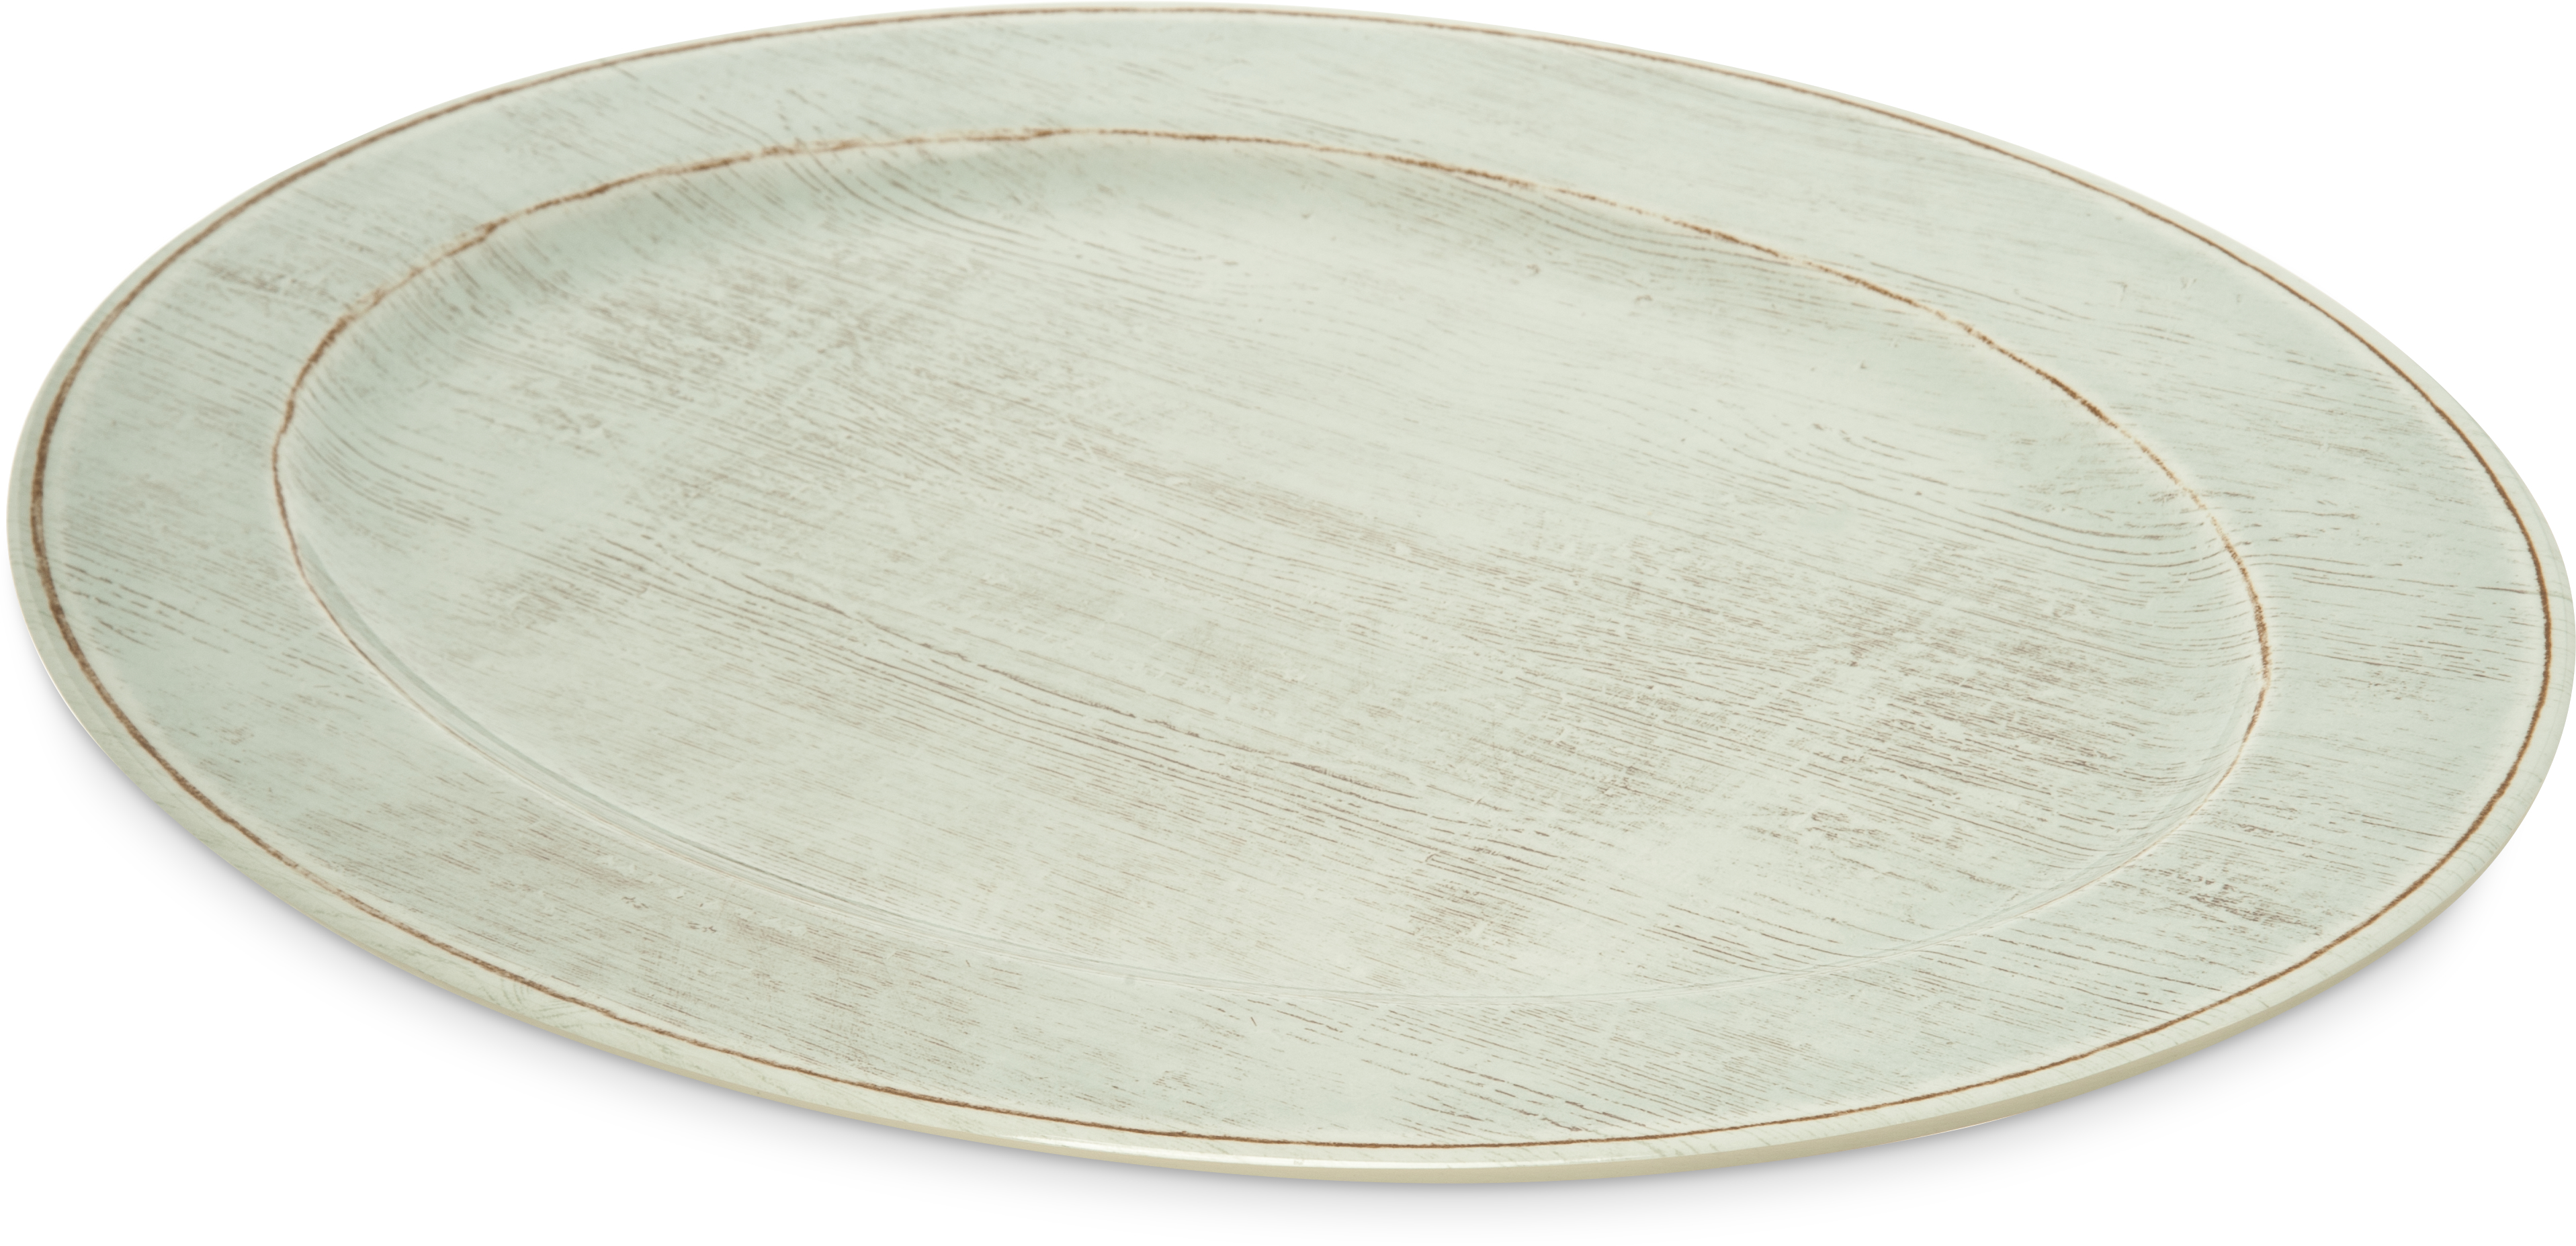 Melamine Oval Platter Tray 20 x 14 - Buff